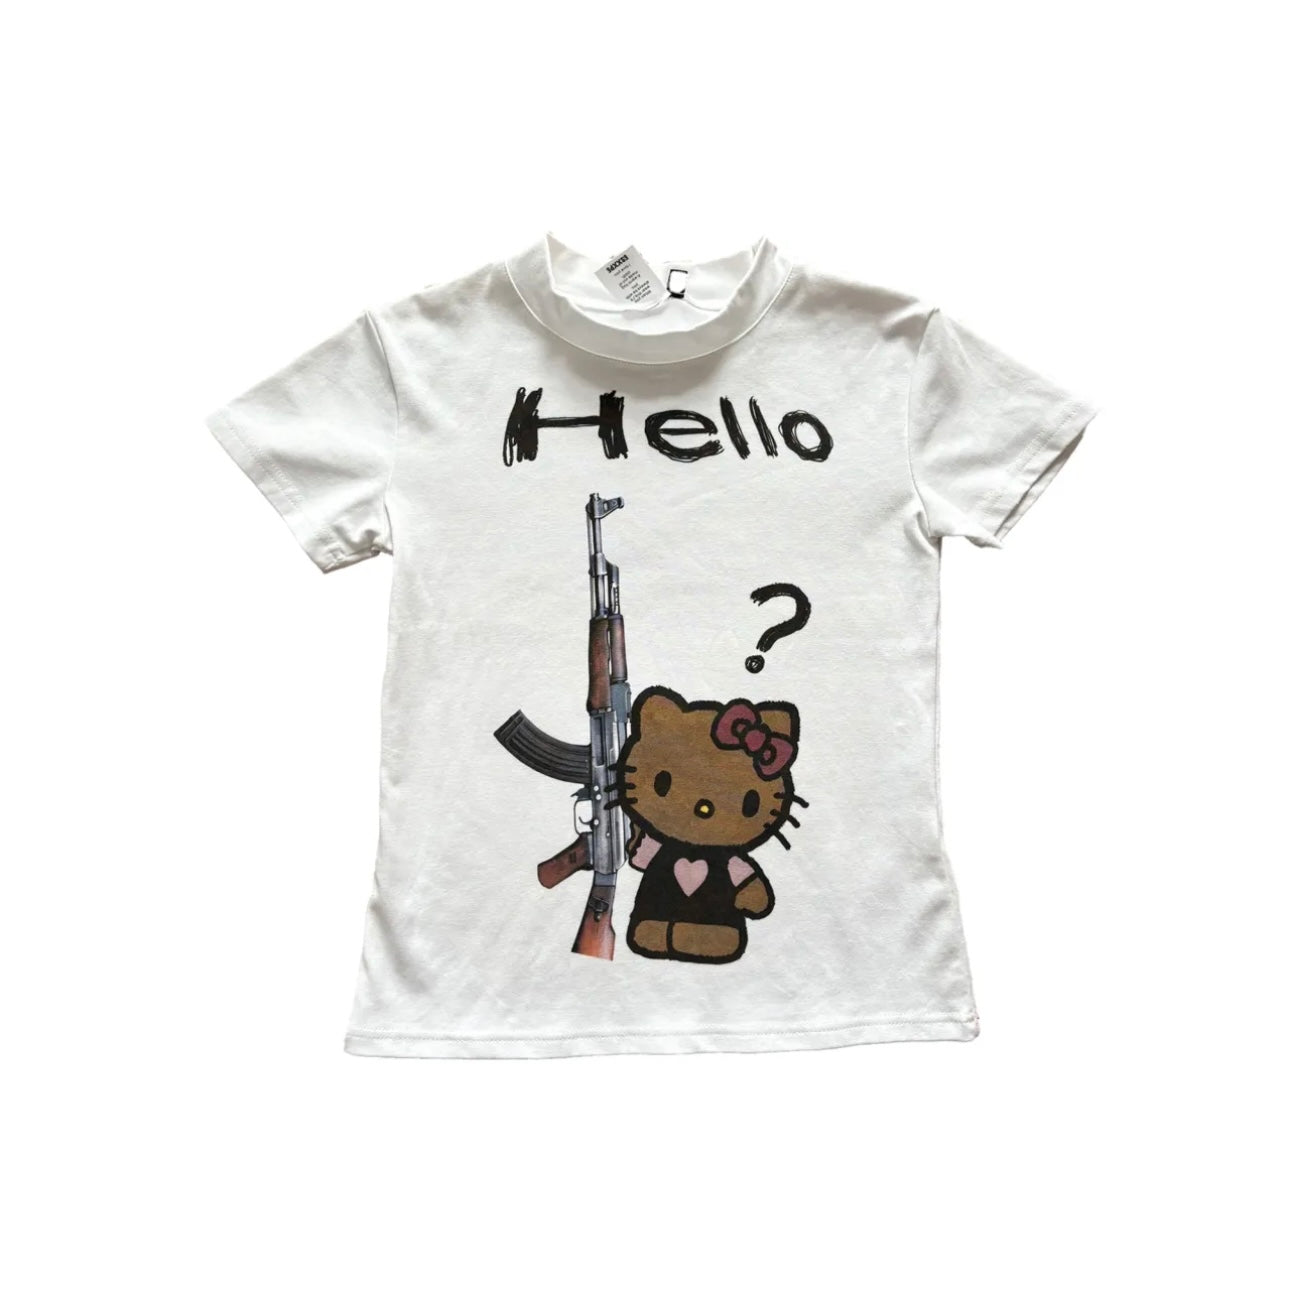 Hellokitty Funny Sleeves Short Sleeve Tee Casual Summer T Shirt Top